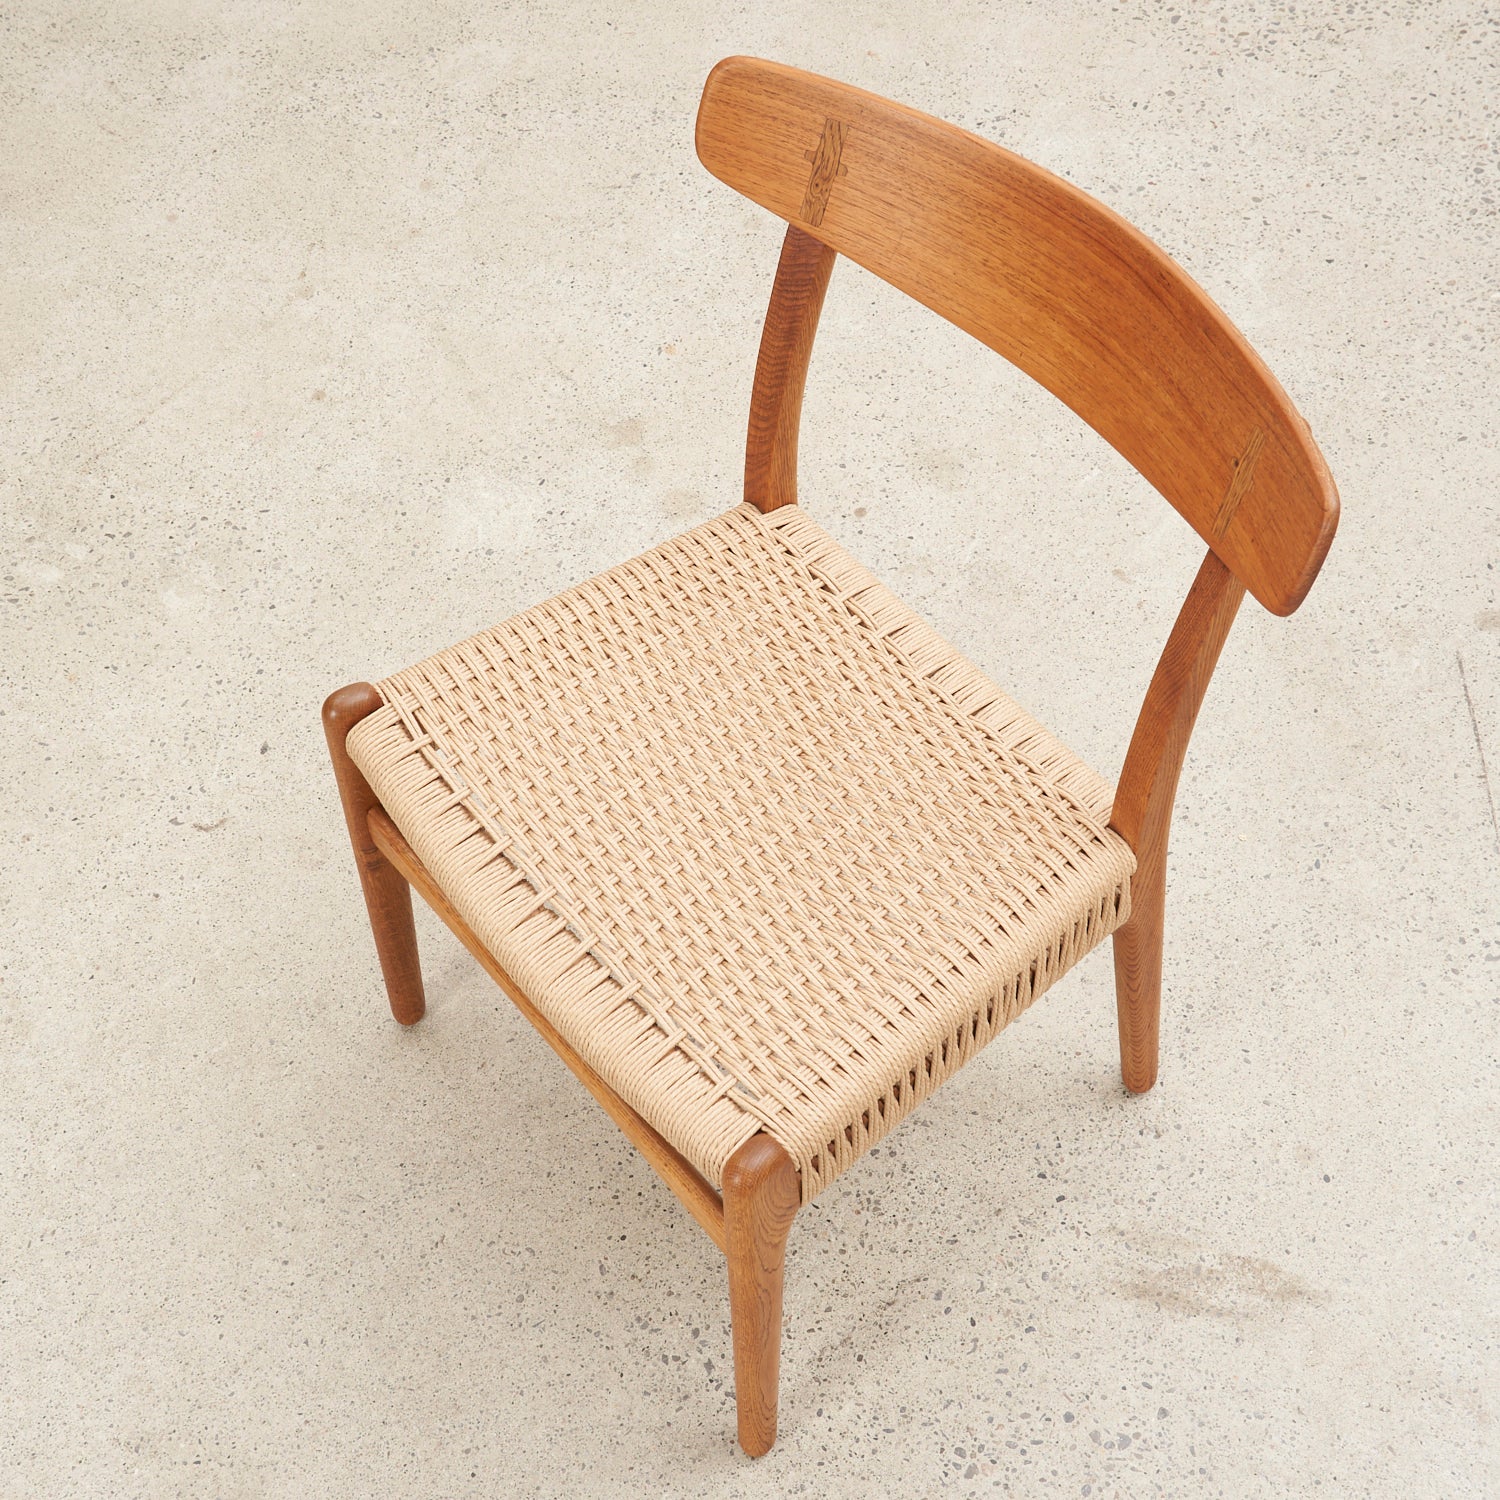 Set of 4 Oak 'CH23' Dining Chairs by Hans Wegner for Carl Hansen & Søn, Denmark